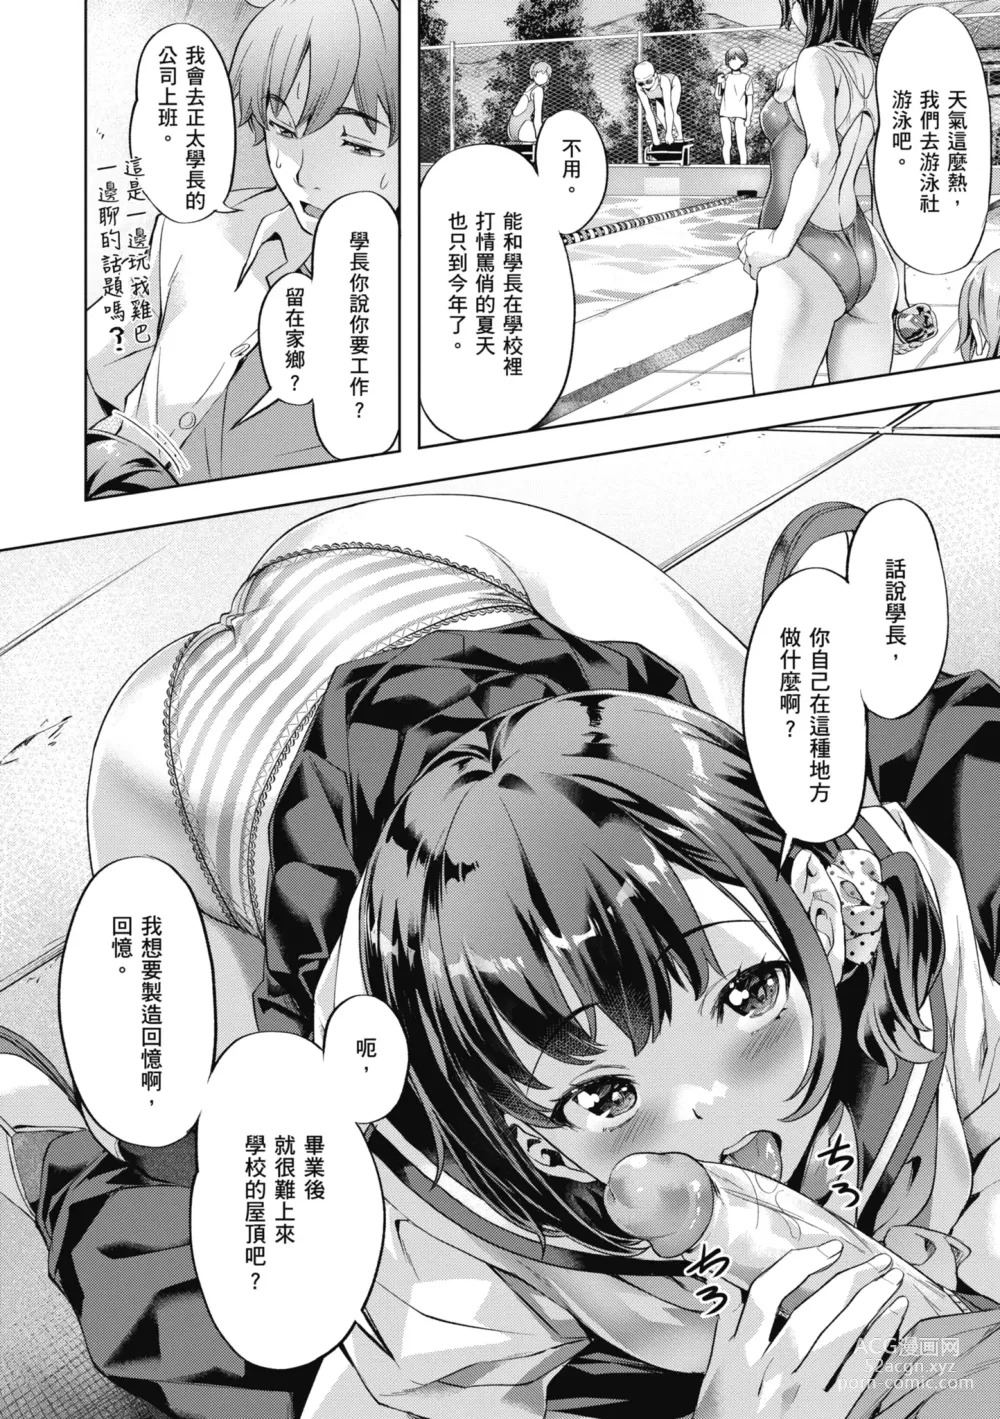 Page 6 of manga 媚熱情慾誘惑 (decensored)